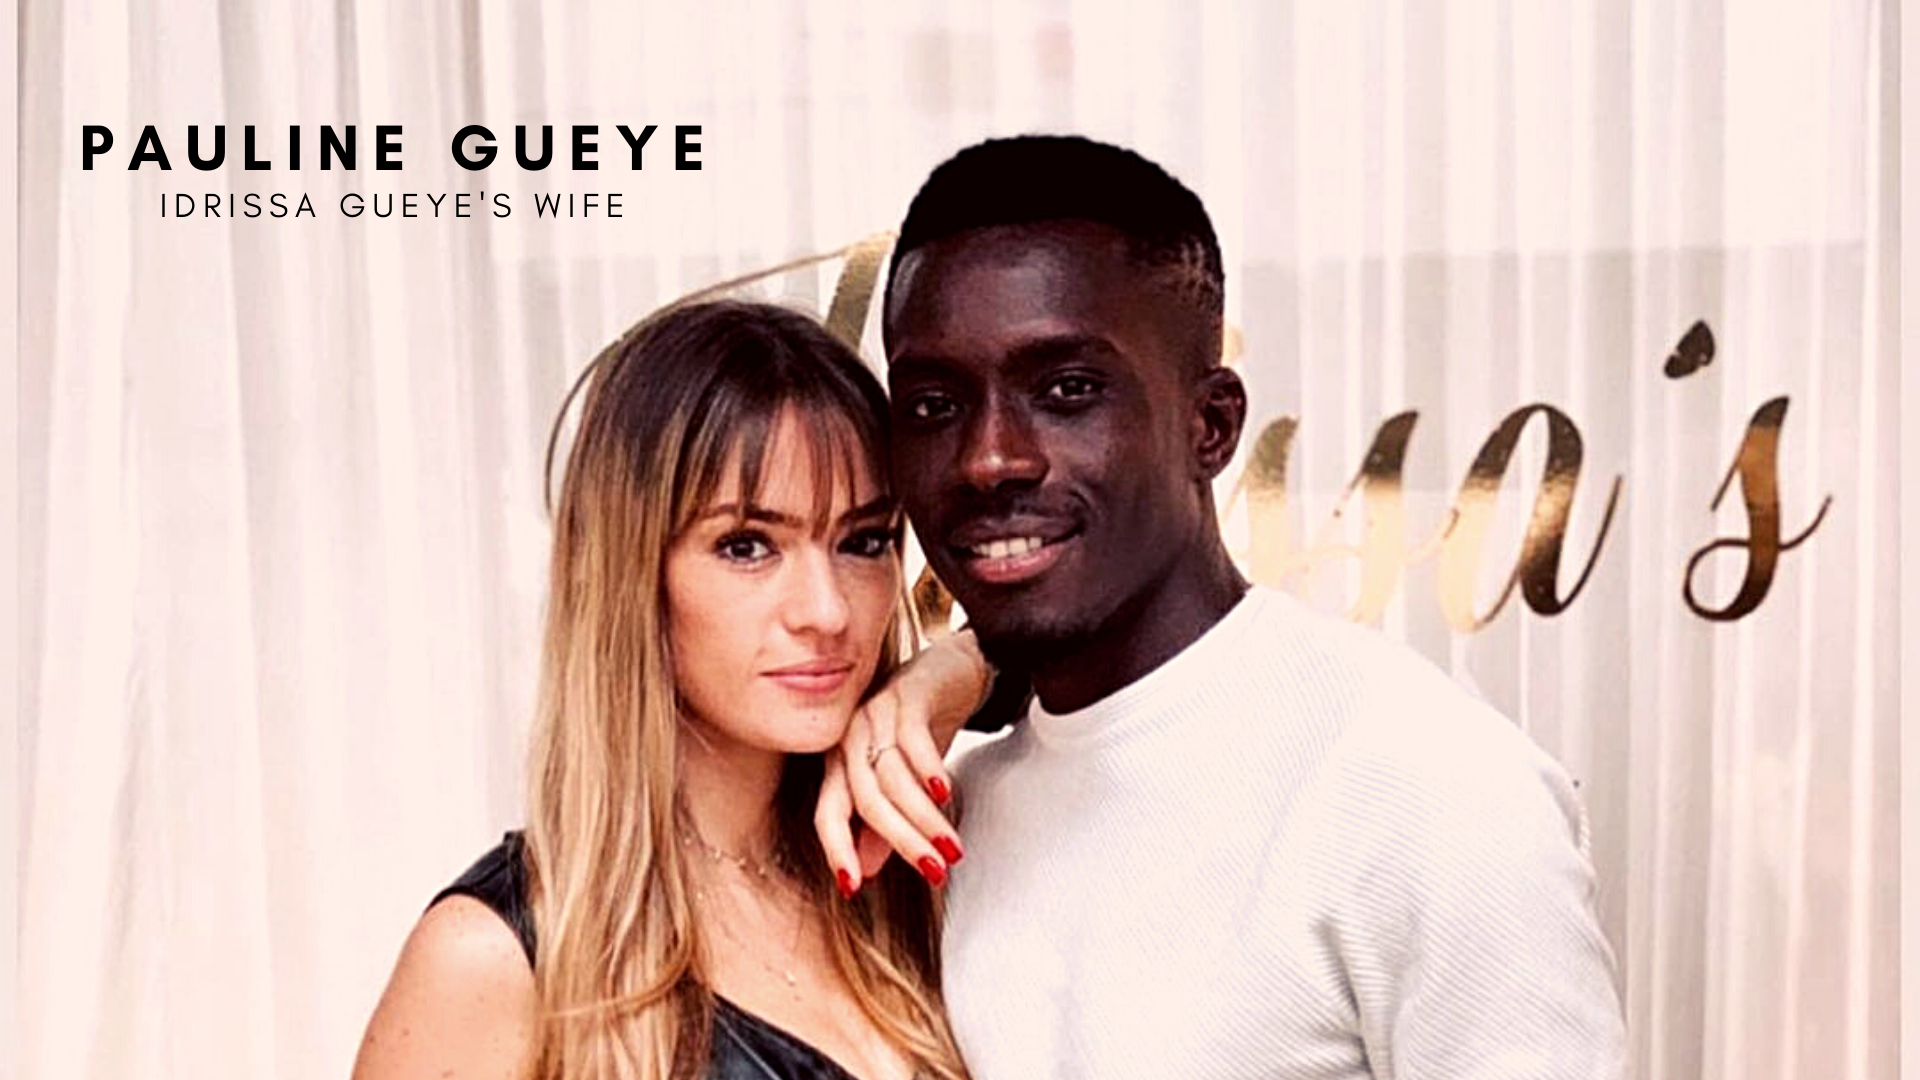 Idrissa Gueye with wife Pauline Gueye. (Credit: Instagram)